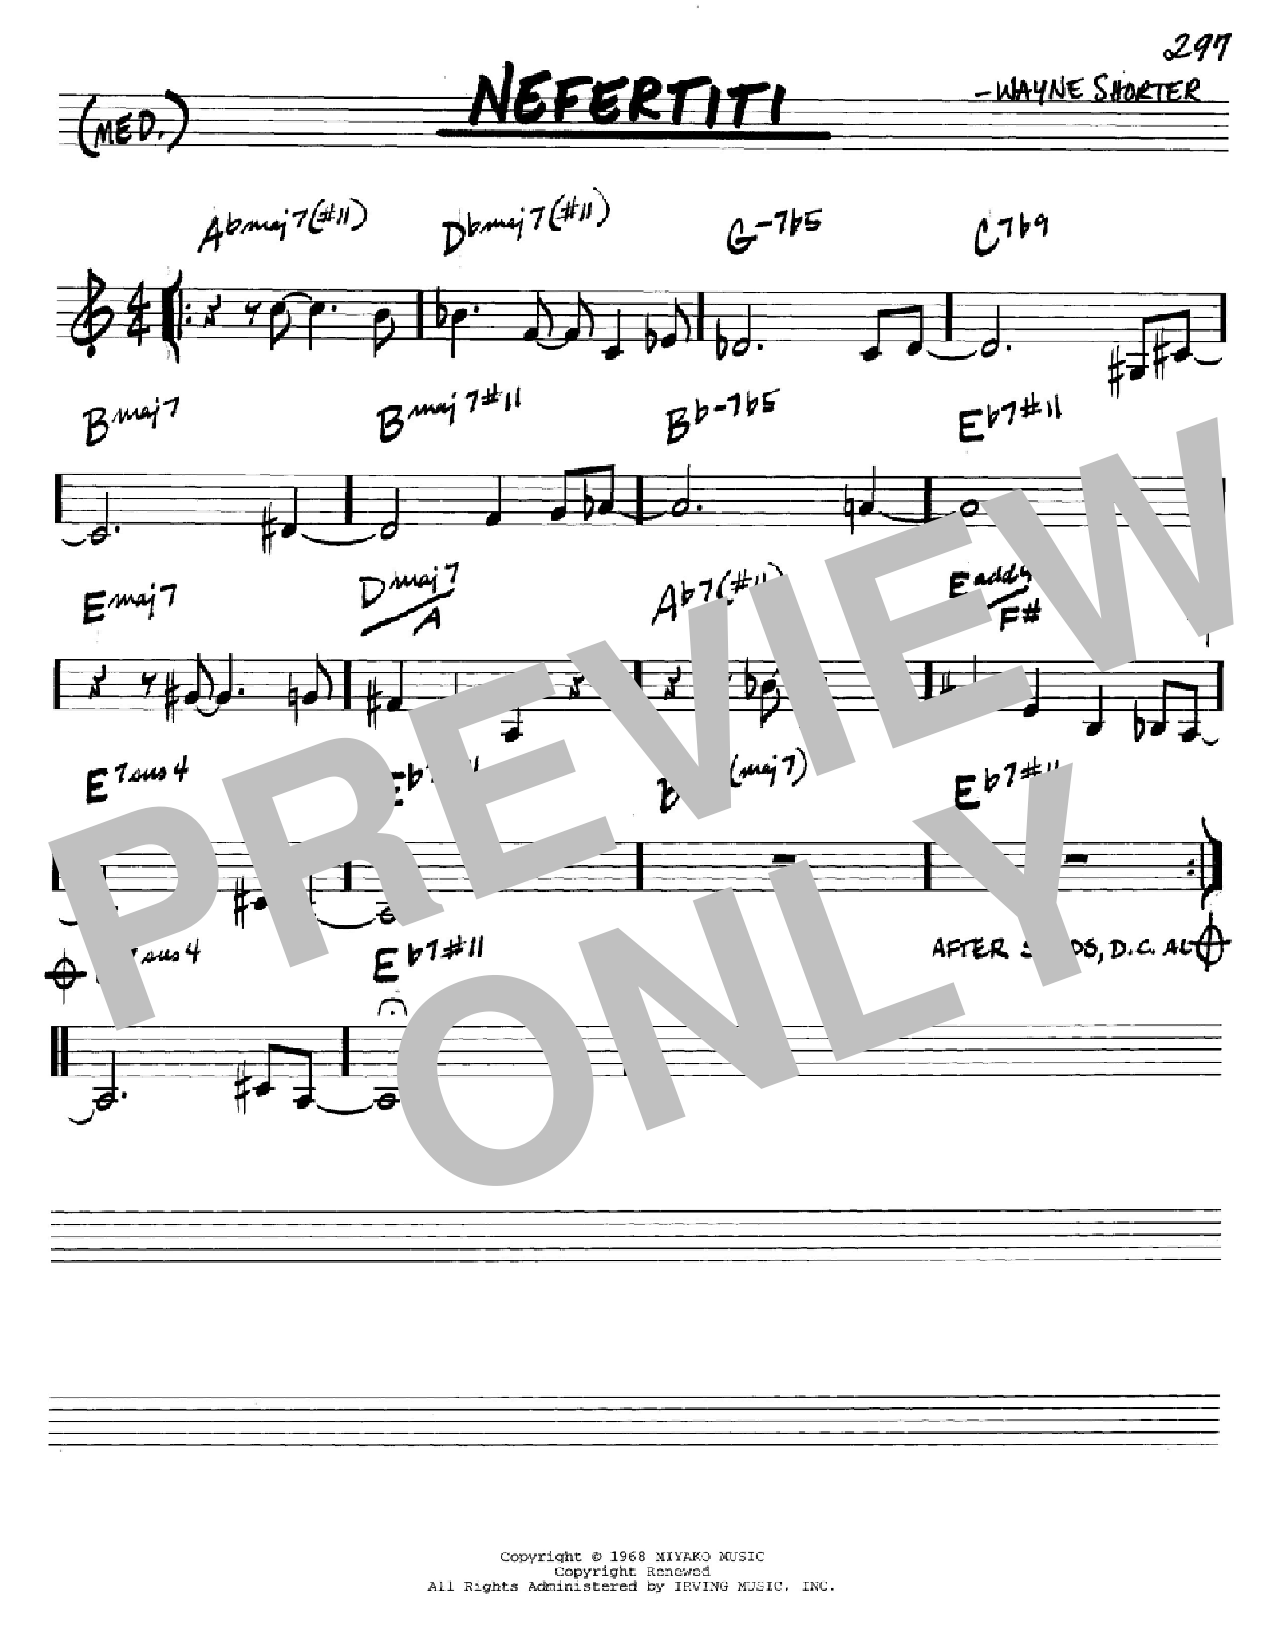 Wayne Shorter Nefertiti Sheet Music Notes & Chords for Real Book - Melody & Chords - Bb Instruments - Download or Print PDF